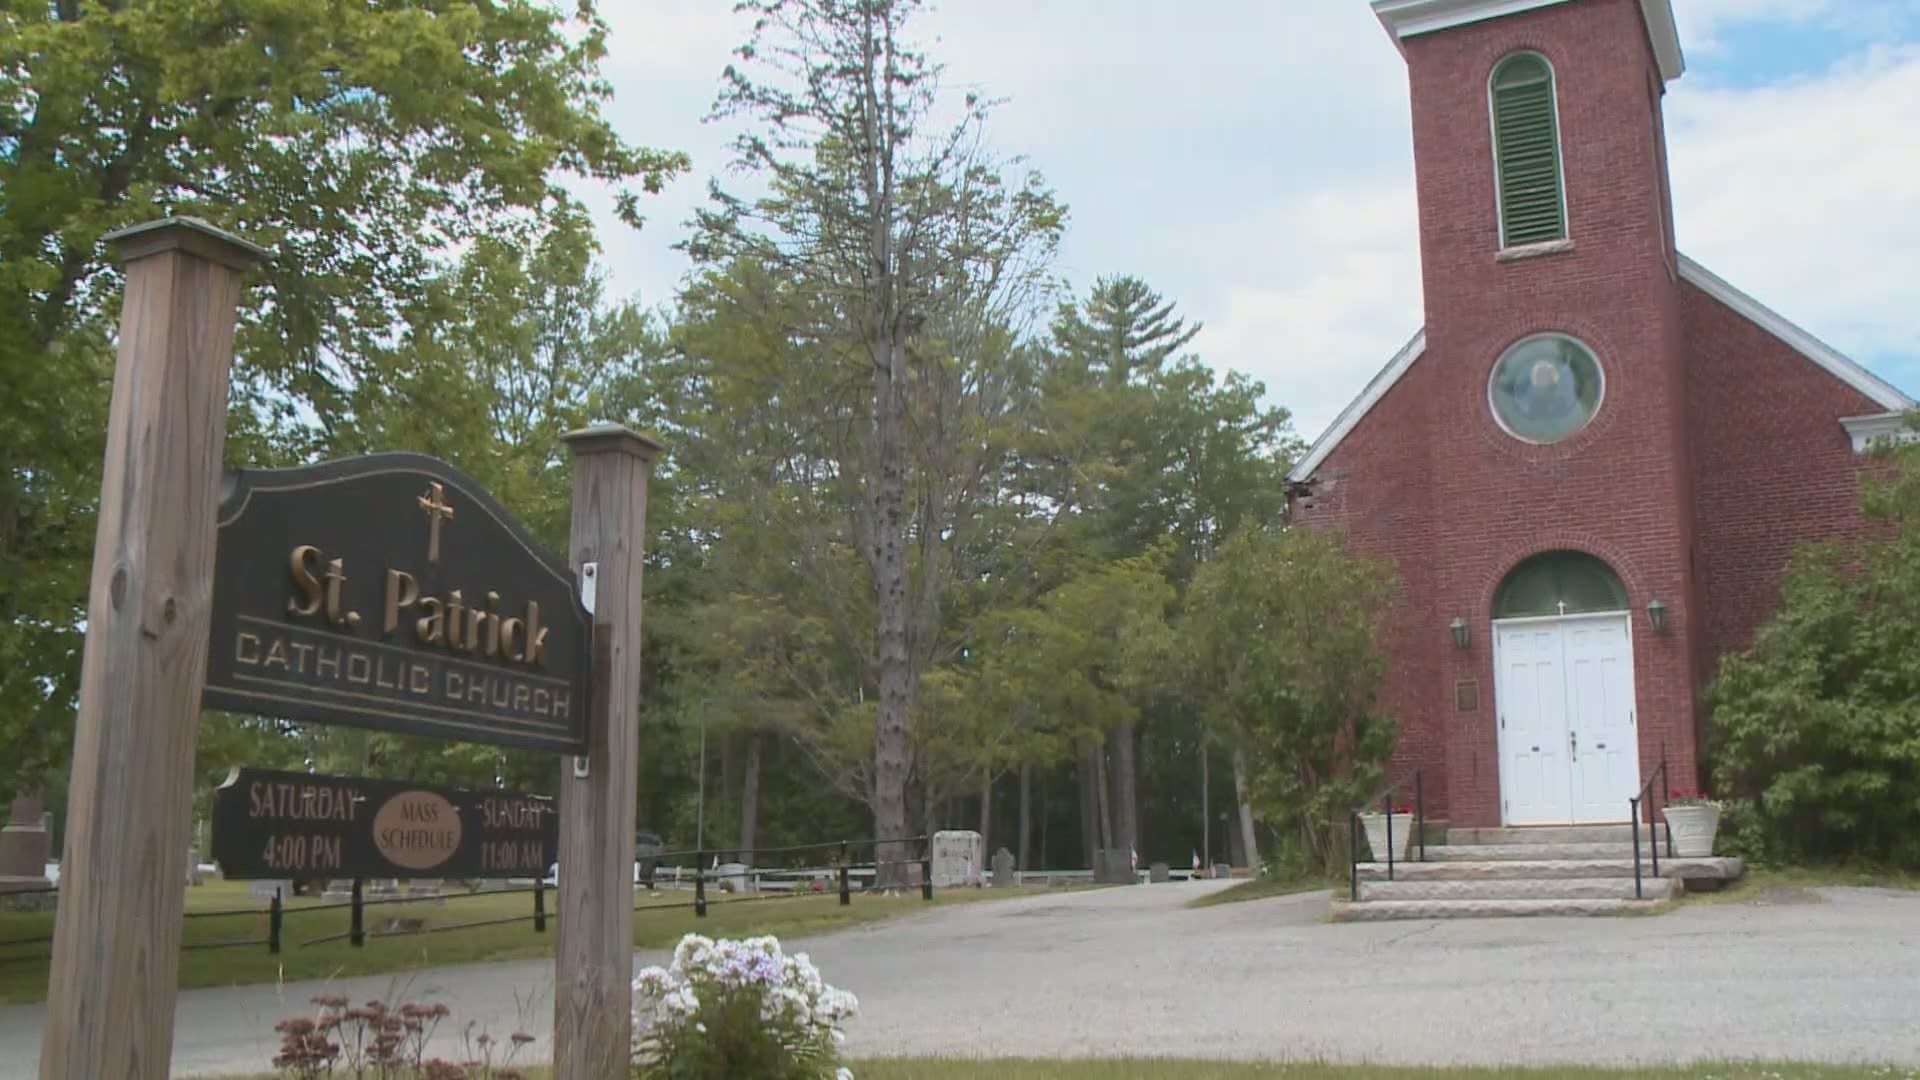 St. Patrick Catholic Church in Newcastle, Maine, is the oldest active catholic church in New England